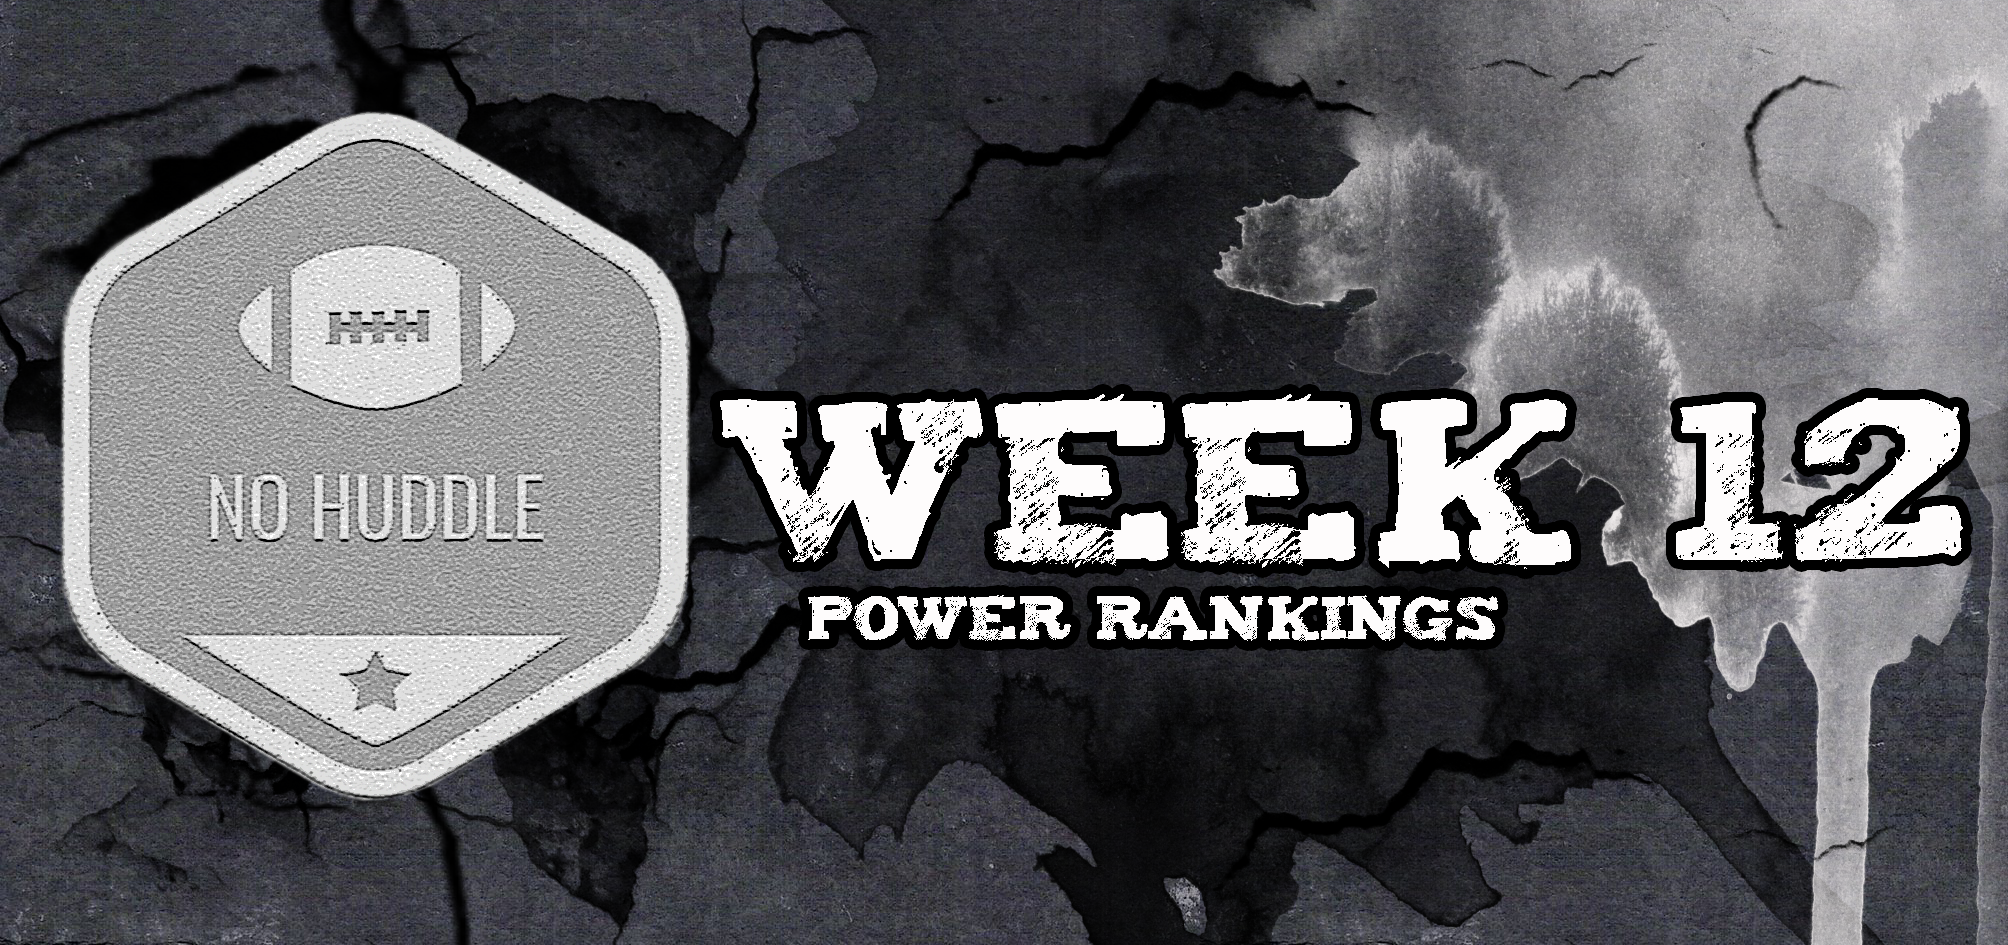 Power Rankings: Semana 12